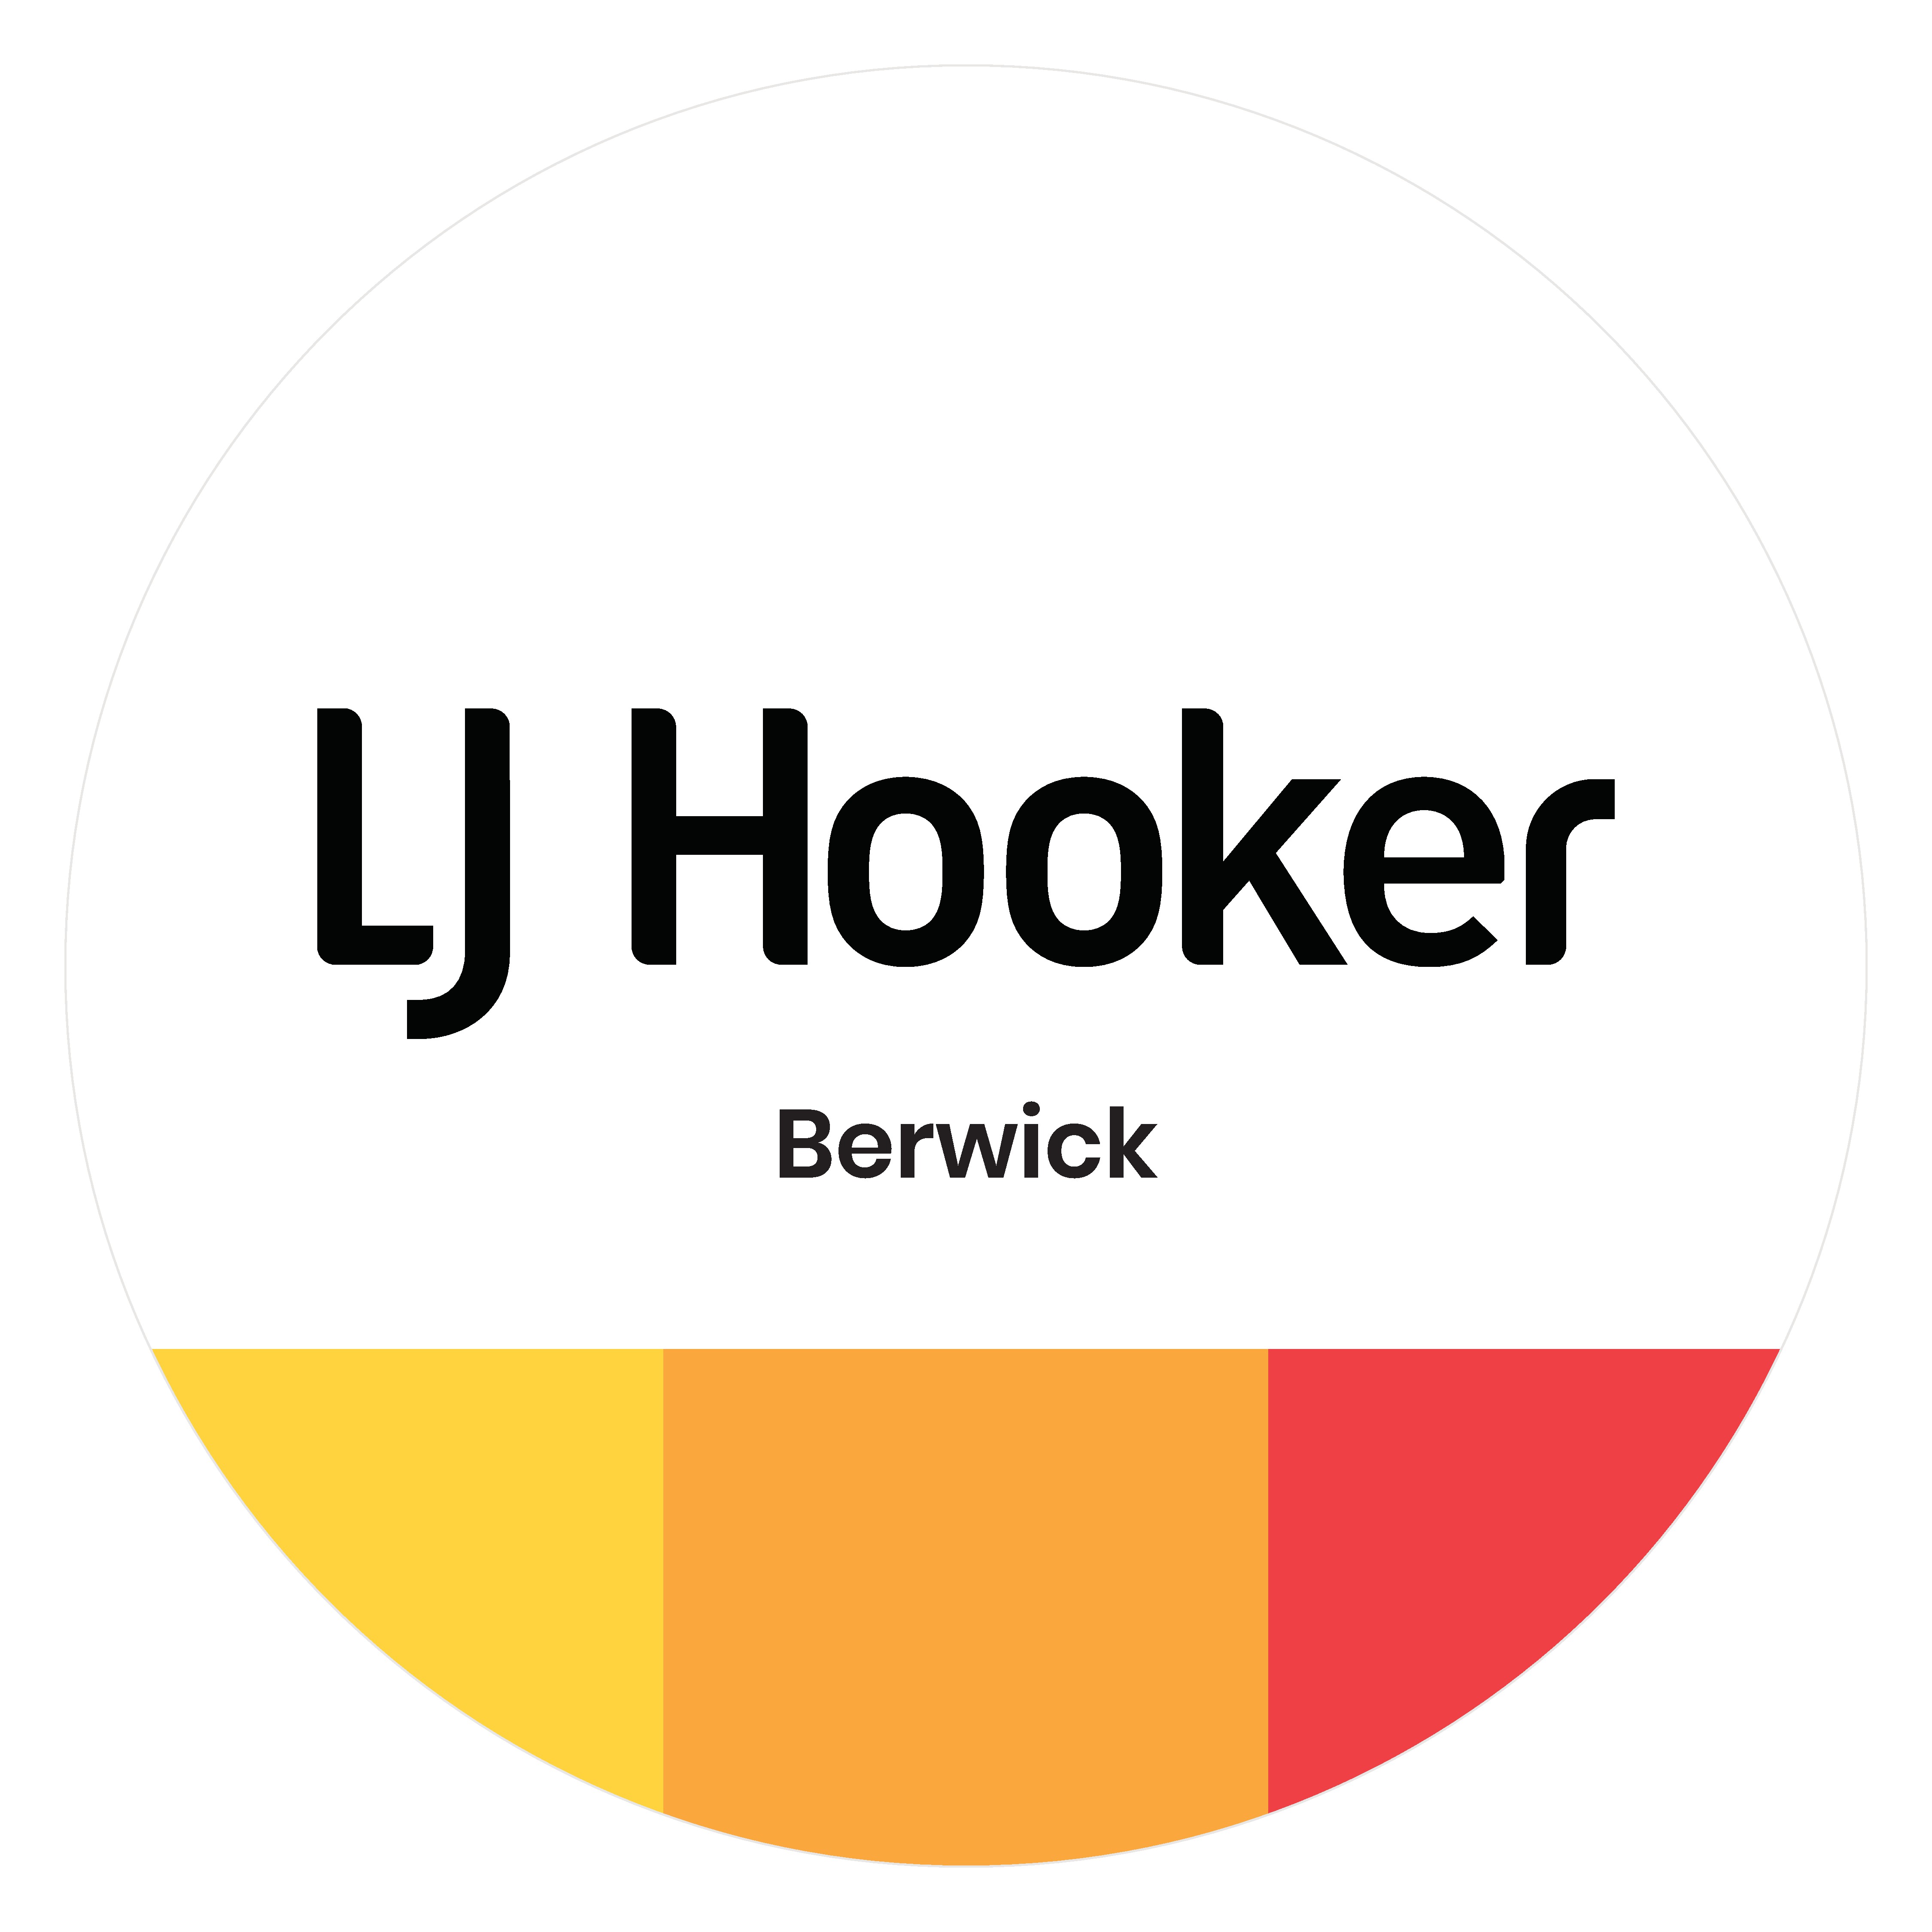 Lj Hooker Berwick Rental Department Real Estate Agent